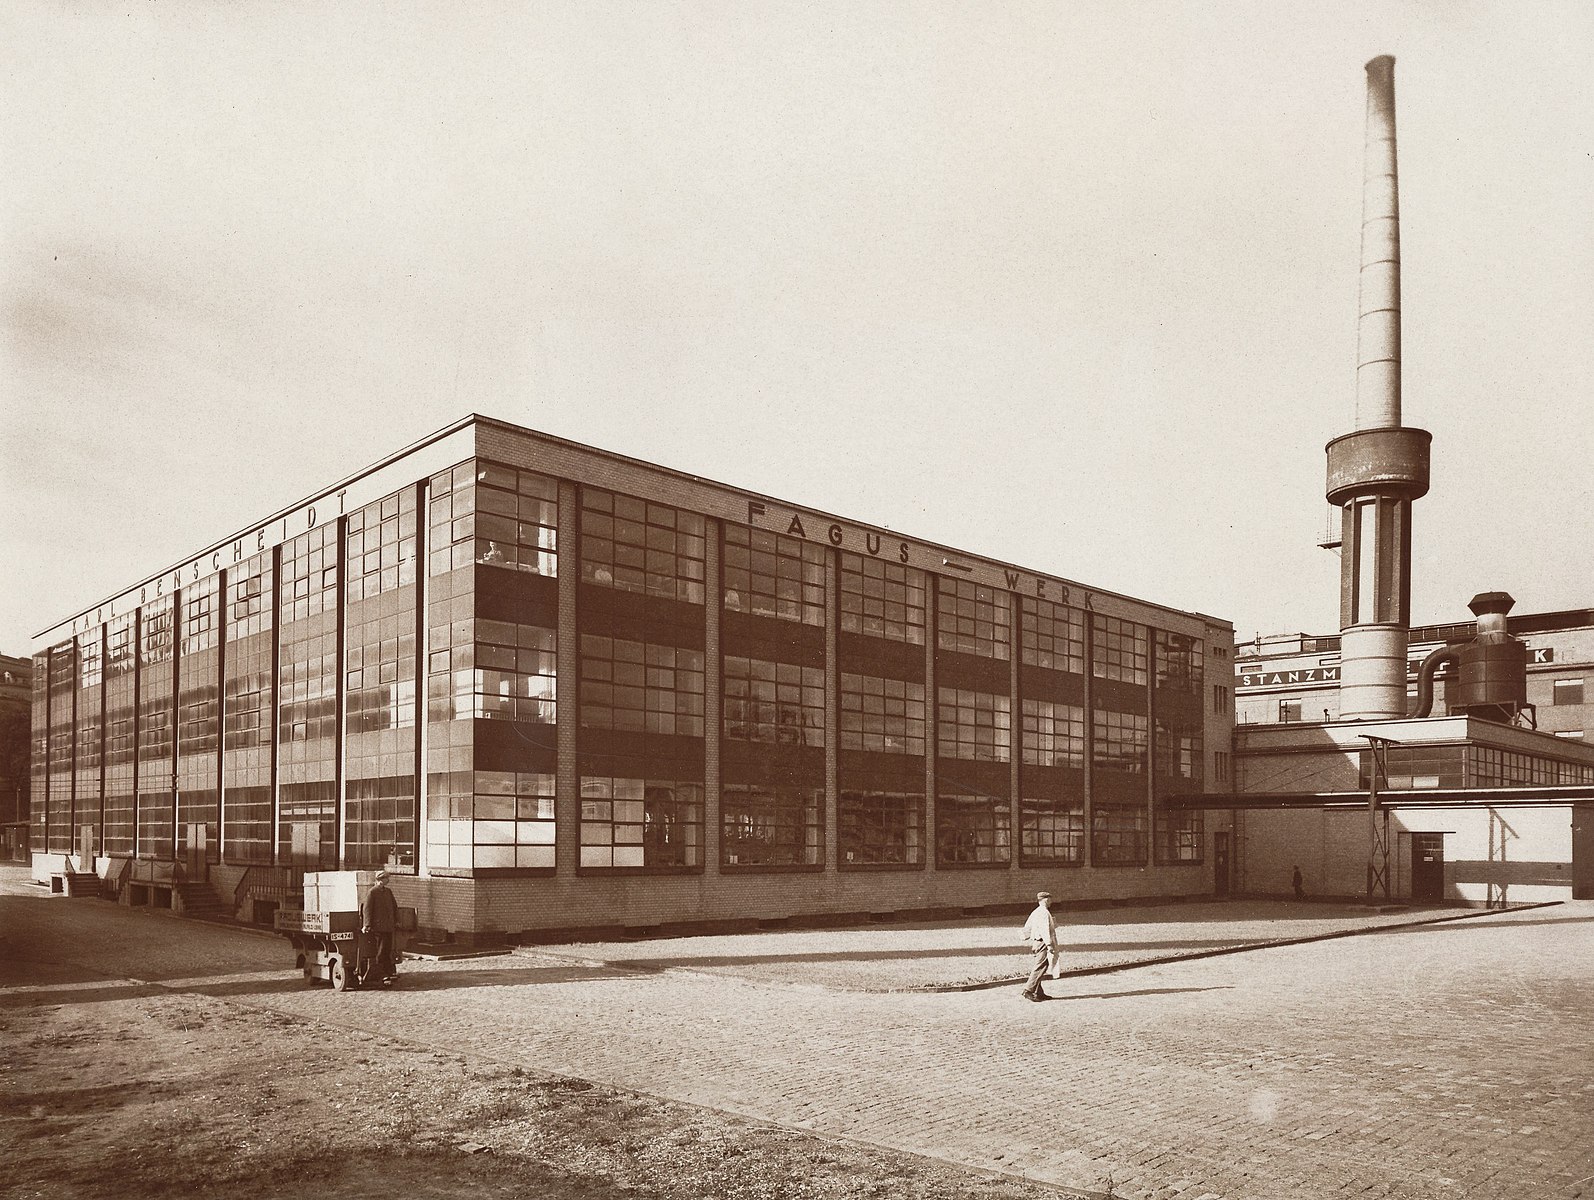 Fagus Factory (Faguswerk), designed by Walter Gropius and Adolf Meyer in Alfeld, Germany.